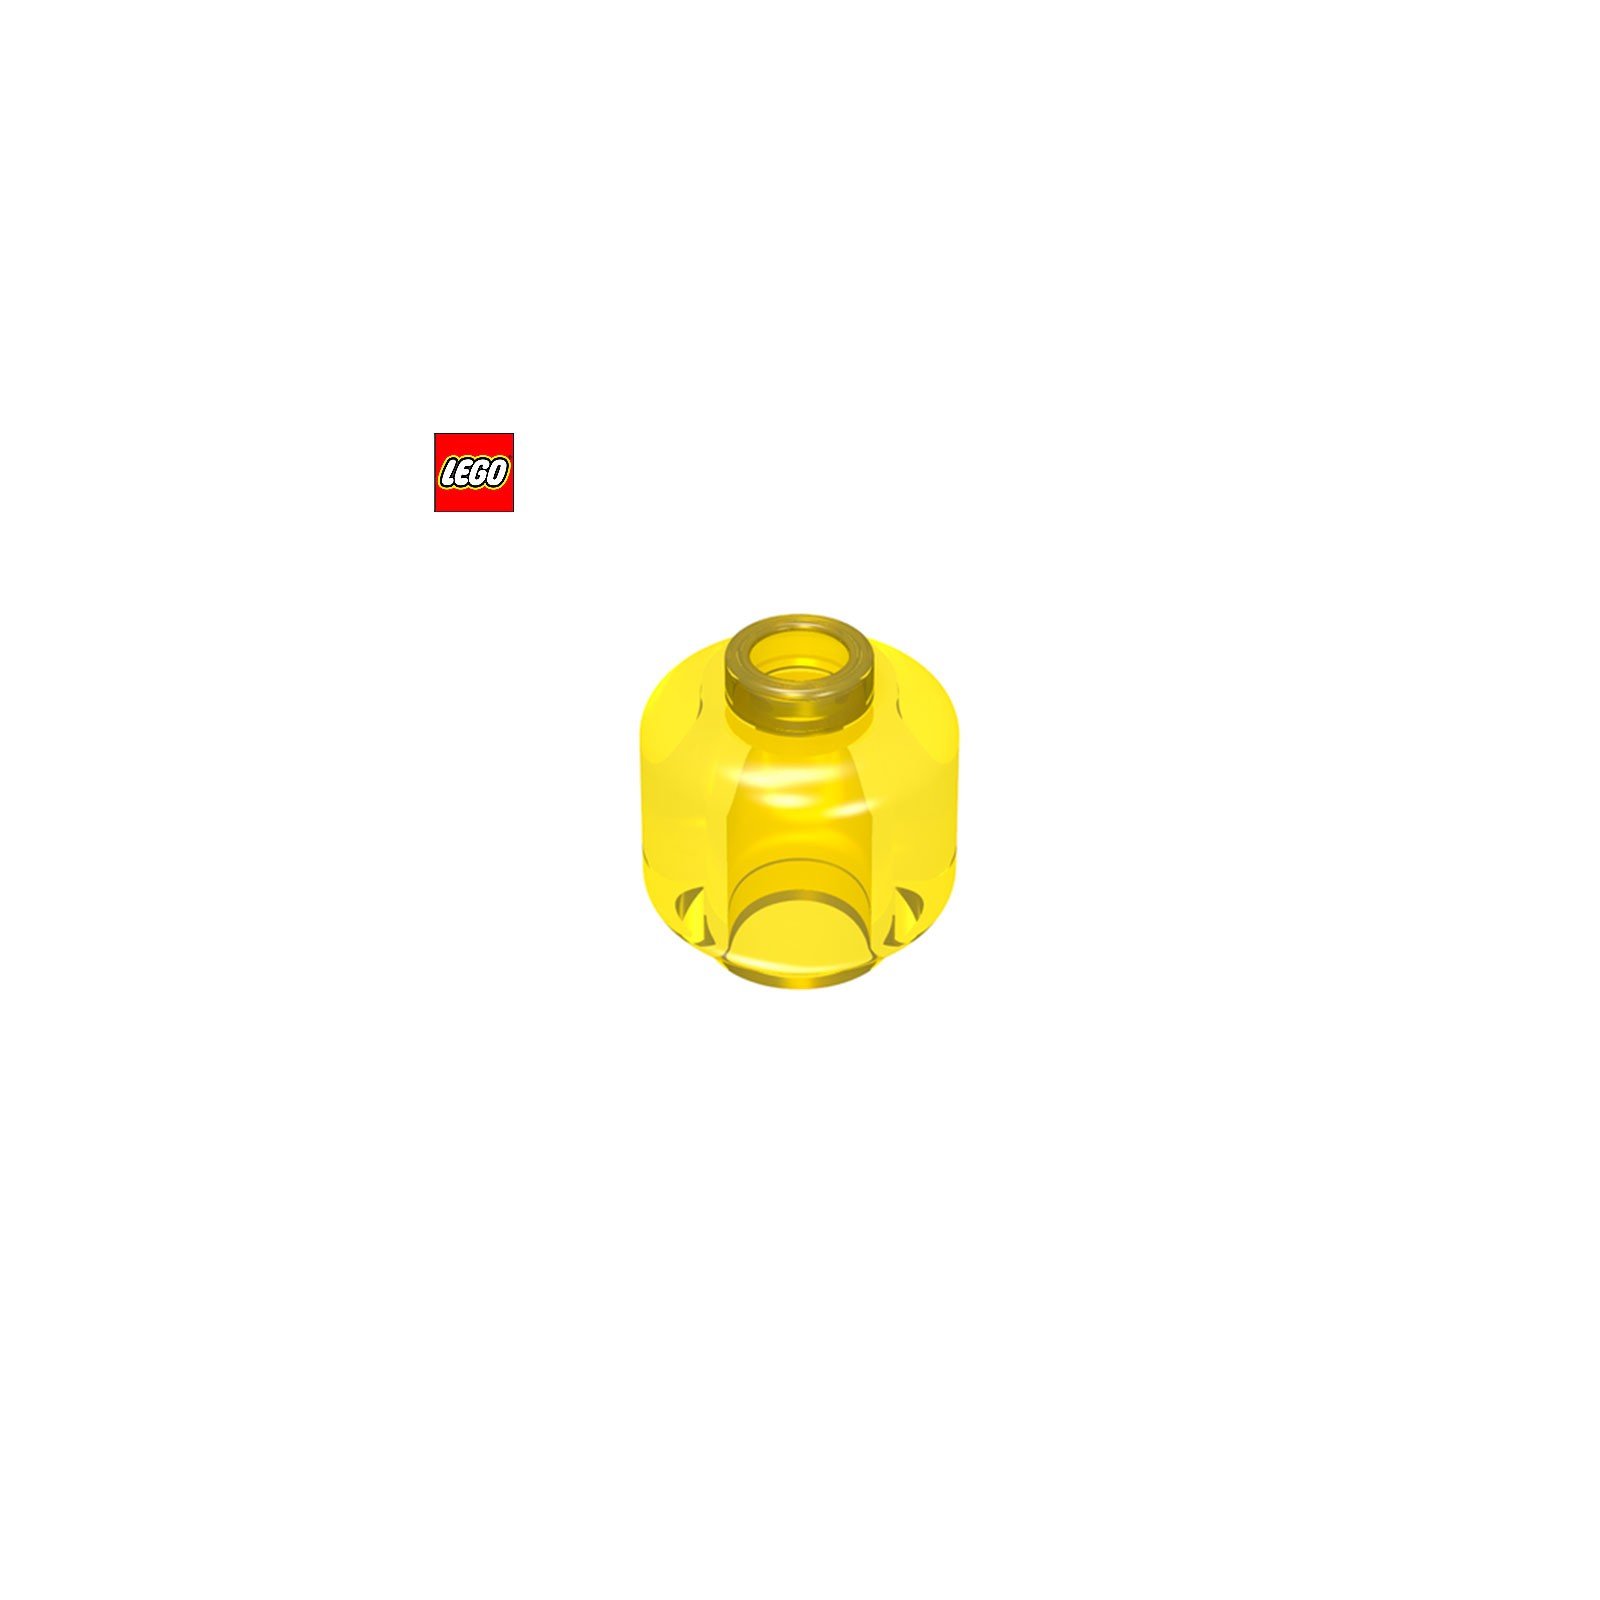 Tête de minifigurine vierge - Pièce LEGO® 28621